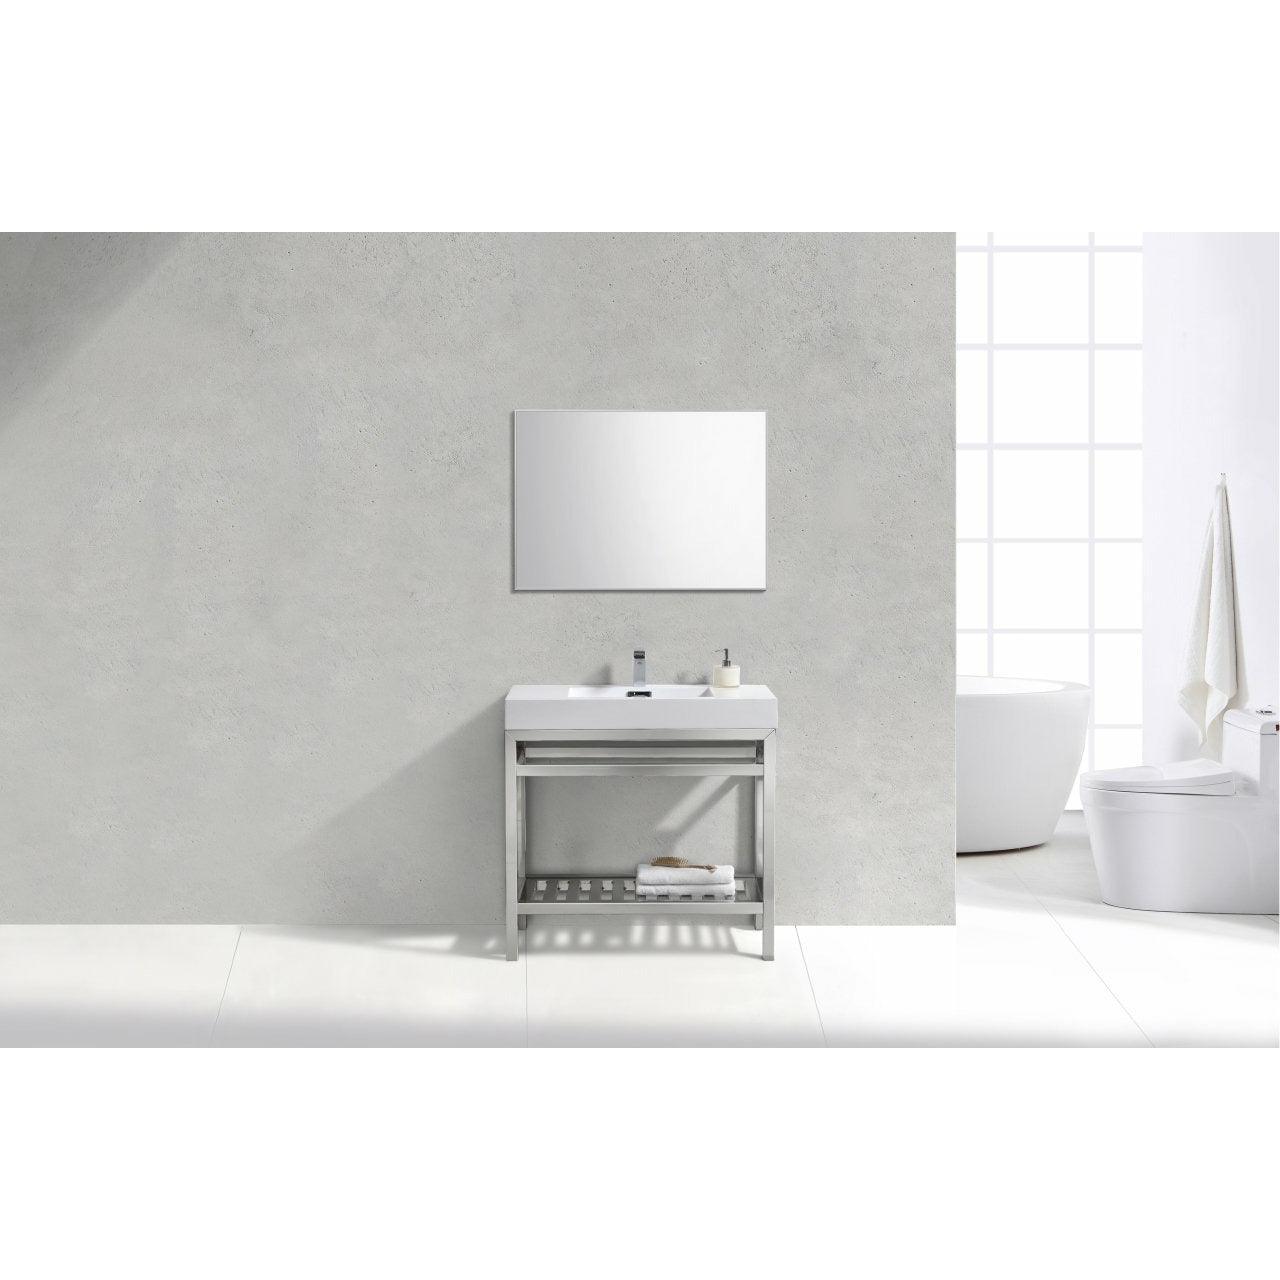 KubeBath Cisco Single Sink Stainless Steel Console with Acrylic Sink - Sea & Stone Bath